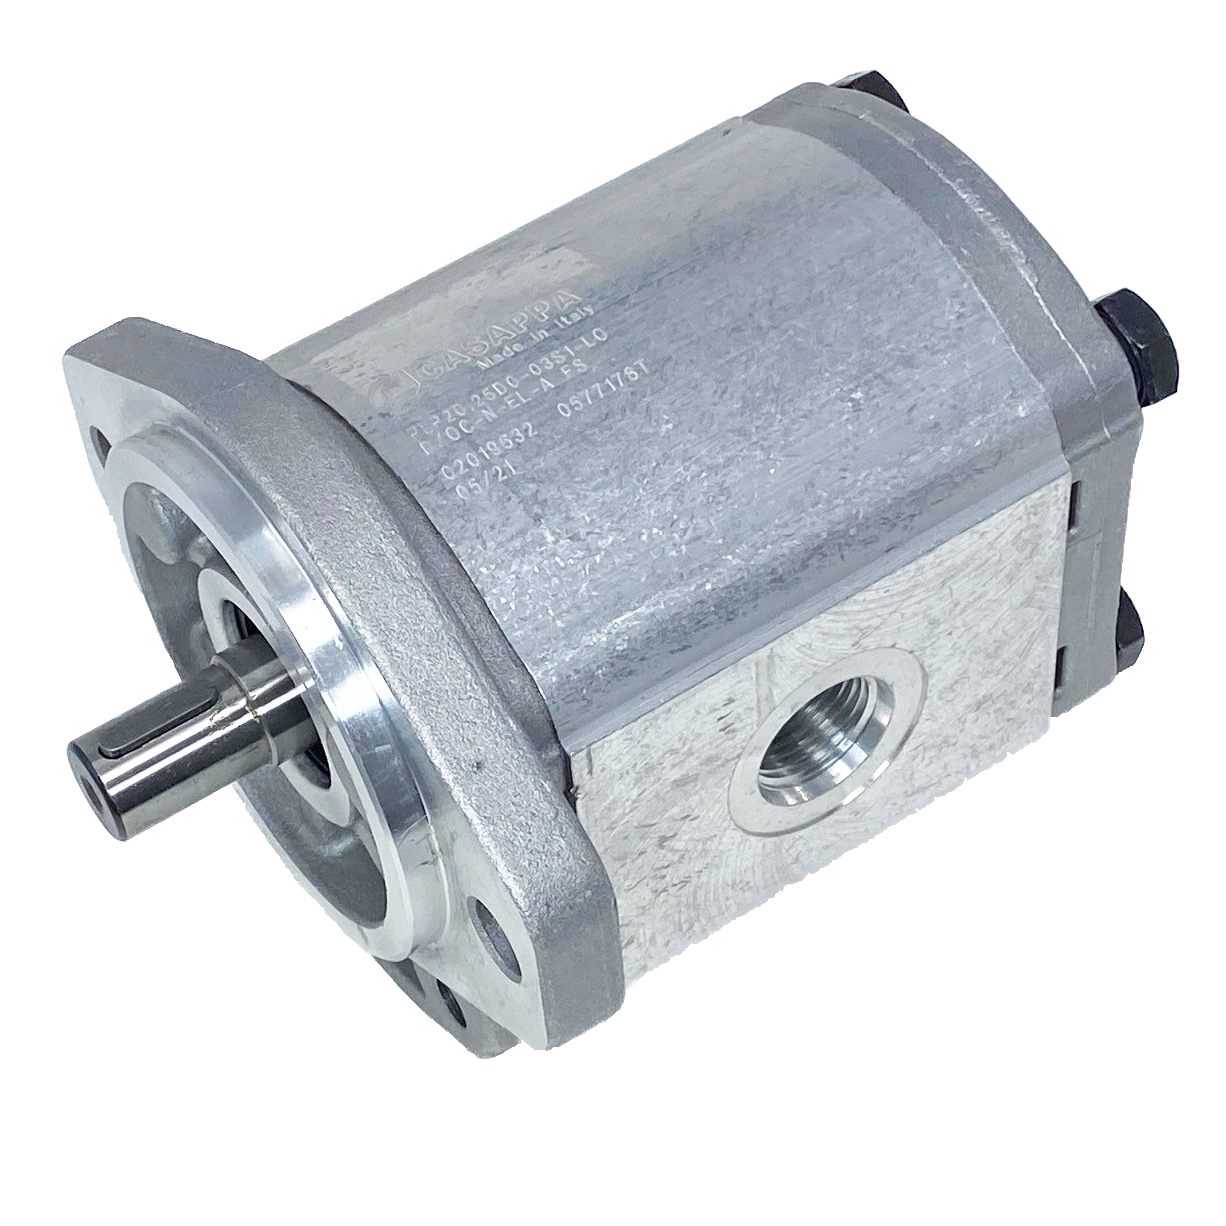 PHM20.31,5R0-31S9-LOC/OG-N-EL : Casappa Polaris Gear Motor, 33.03cc, 2900psi, 2500RPM, Reversible, External Drain, 5/8" Bore x 5/32" Key Shaft, SAE A 2-Bolt Flange, 0.625 (5/8") #10 SAE In, 1.25" #20 SAE Out, Cast Iron Body, Aluminum Flange